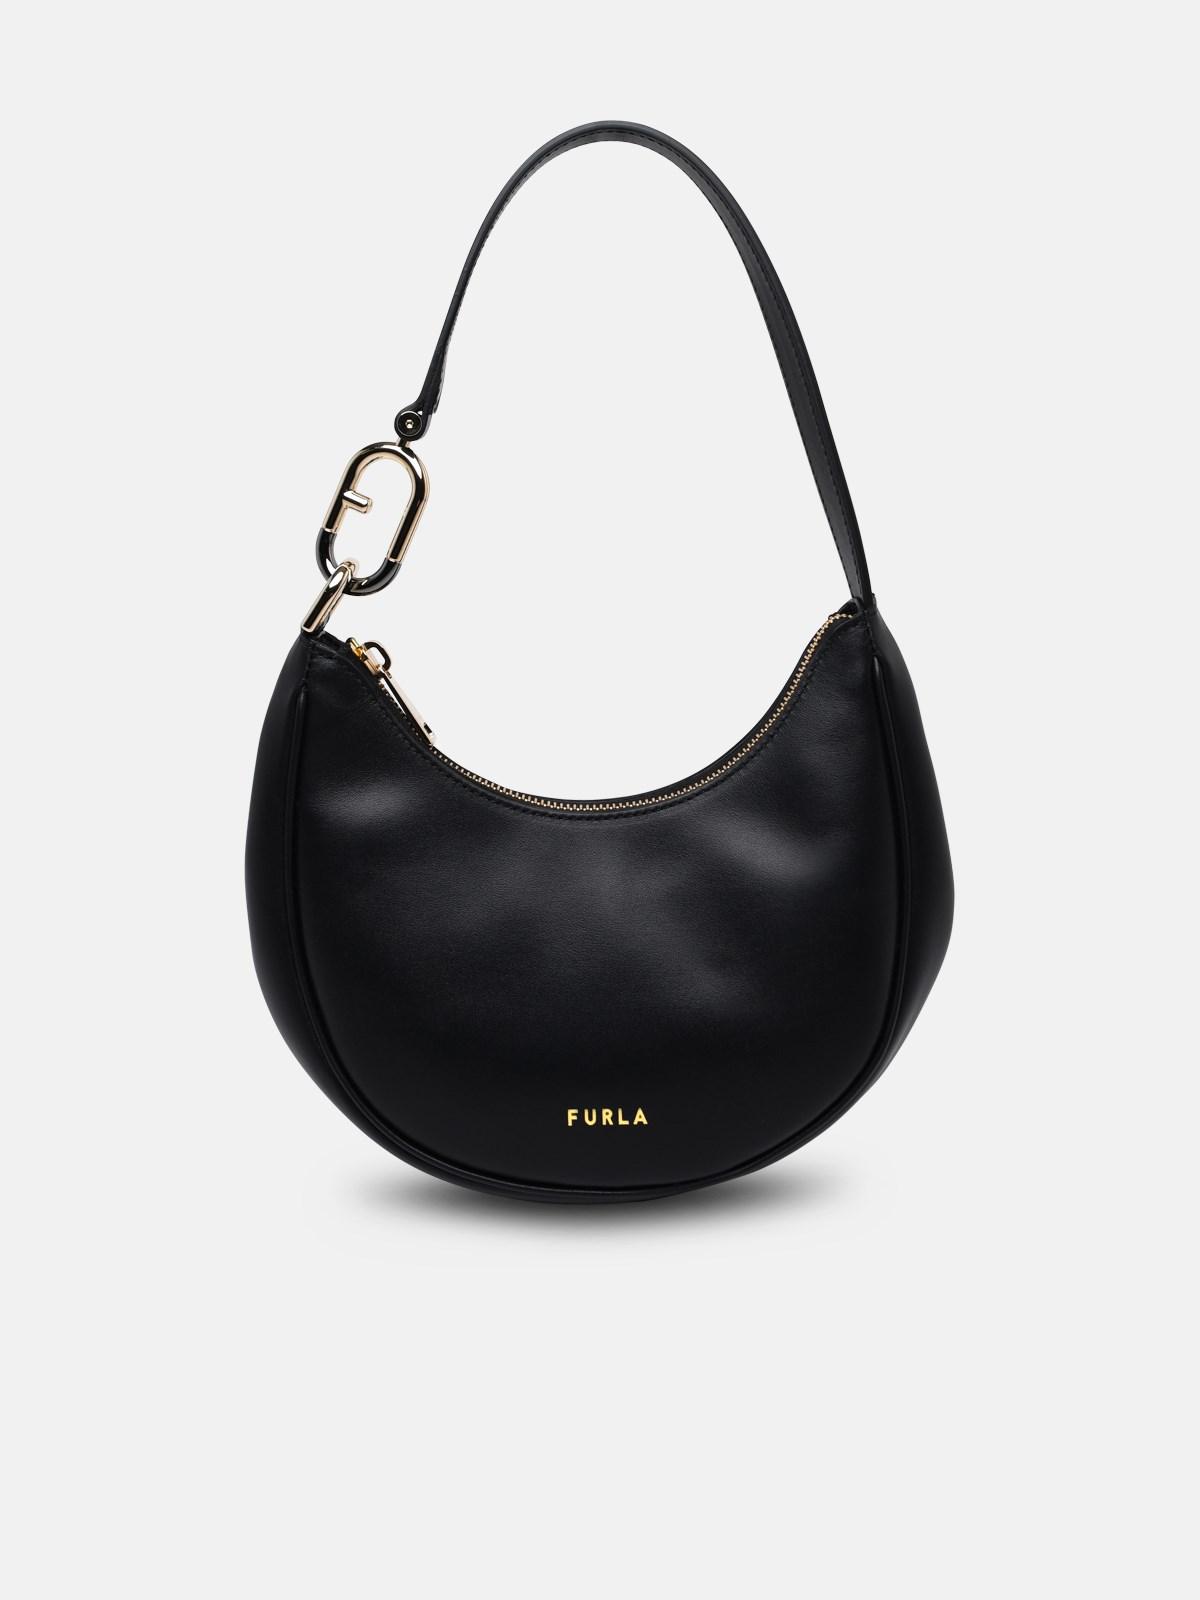 Furla Leather Spring Bag in Black | Lyst